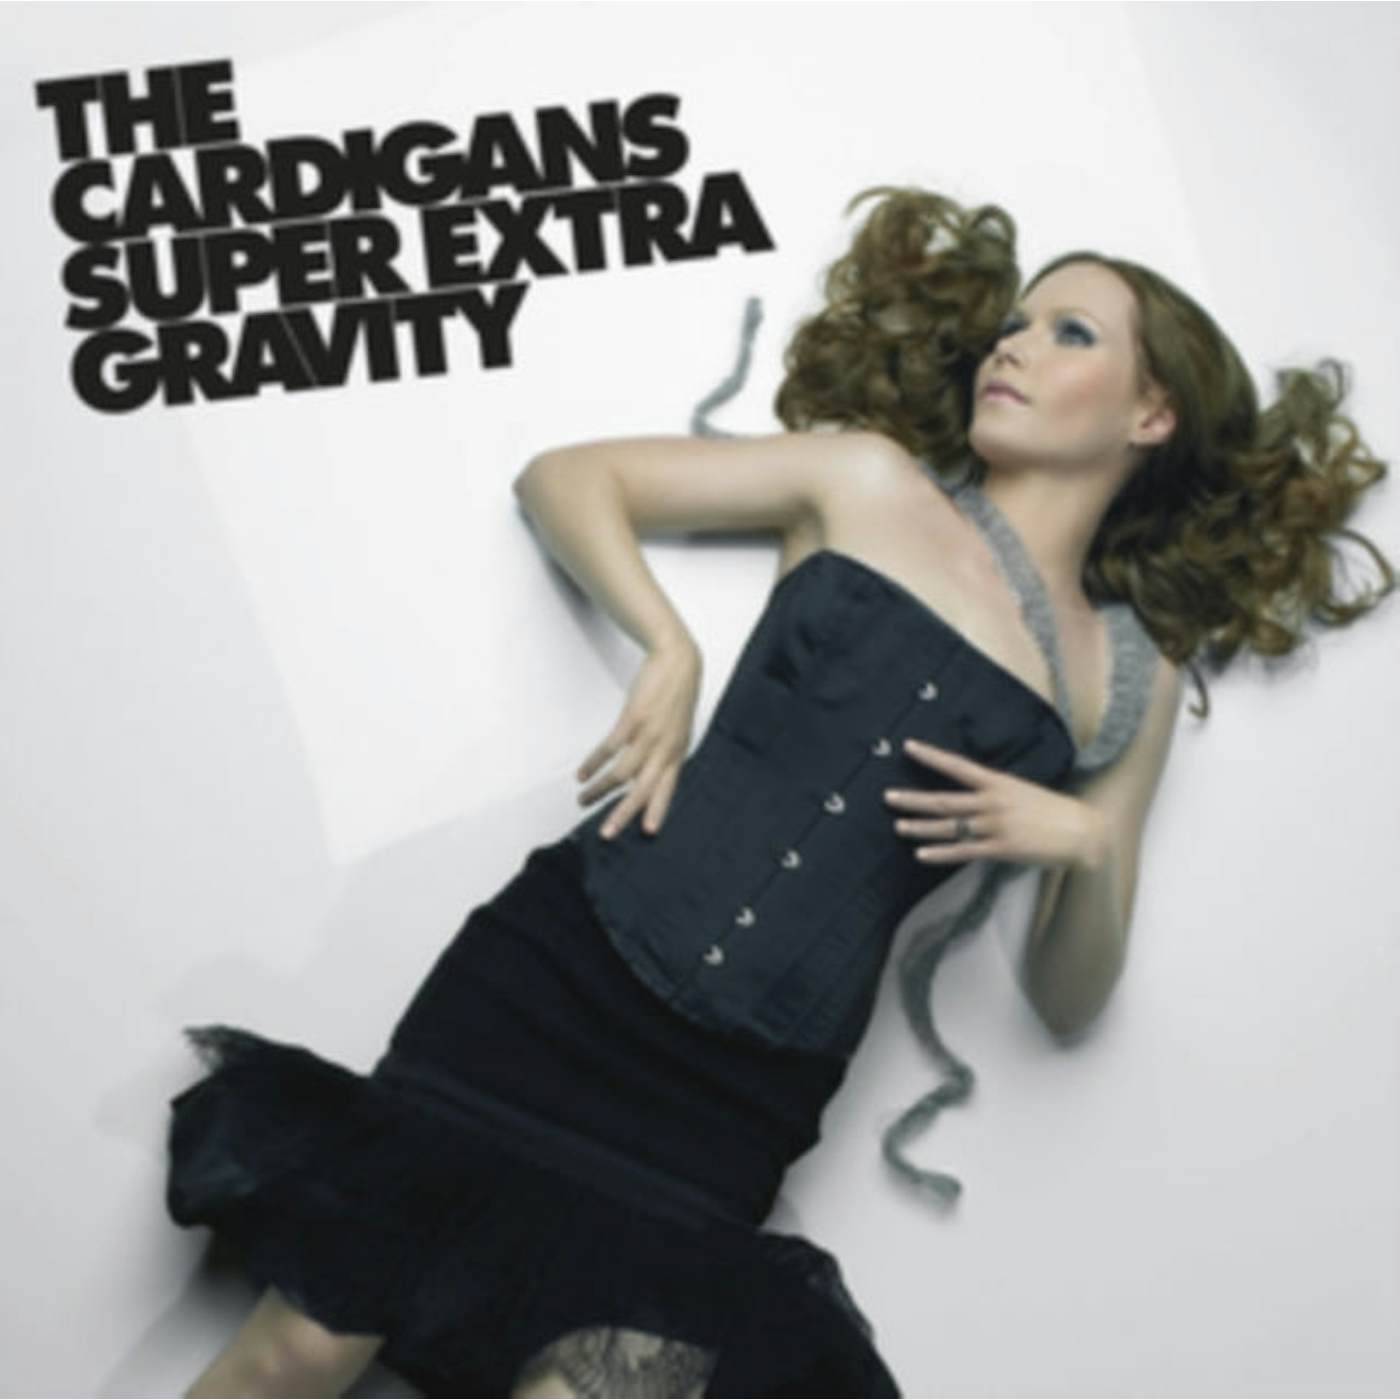 The Cardigans LP Vinyl Record - Super Extra Gravity